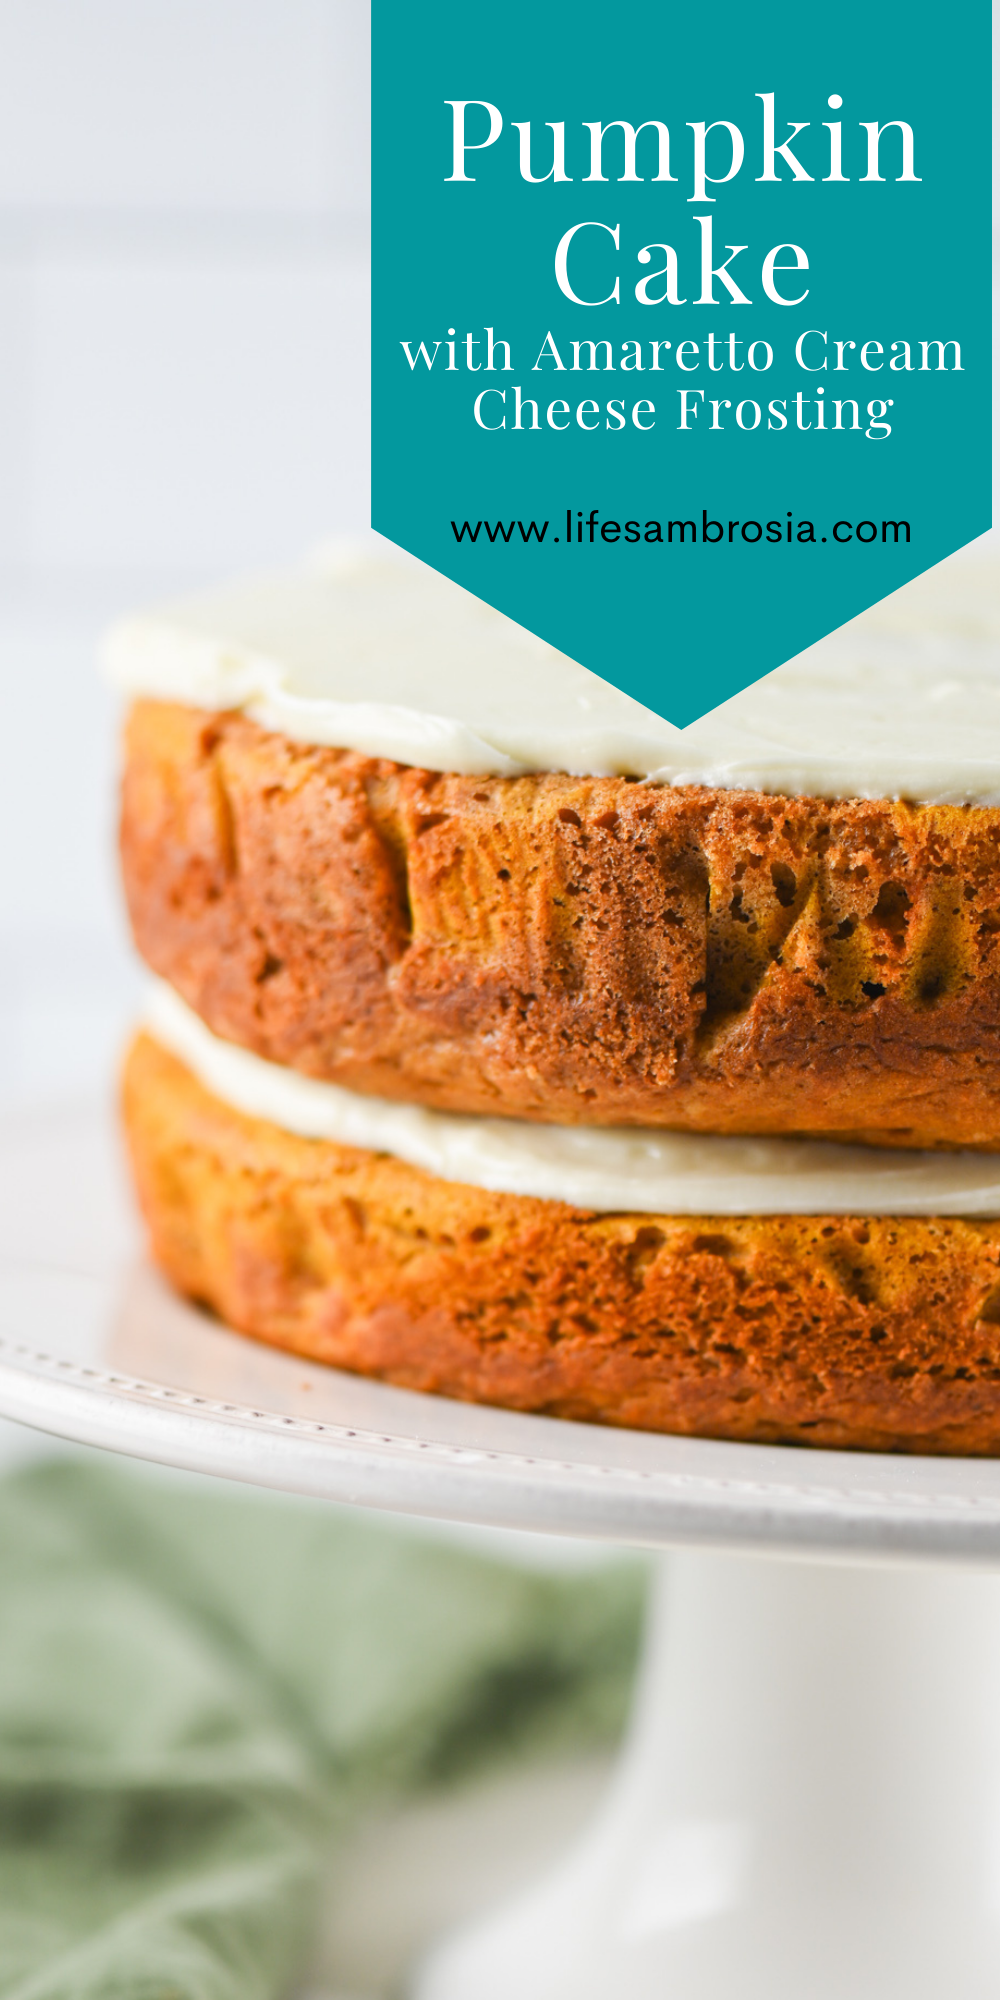 Pumpkin Cake with Amaretto Cream Cheese Frosting - Life's Ambrosia